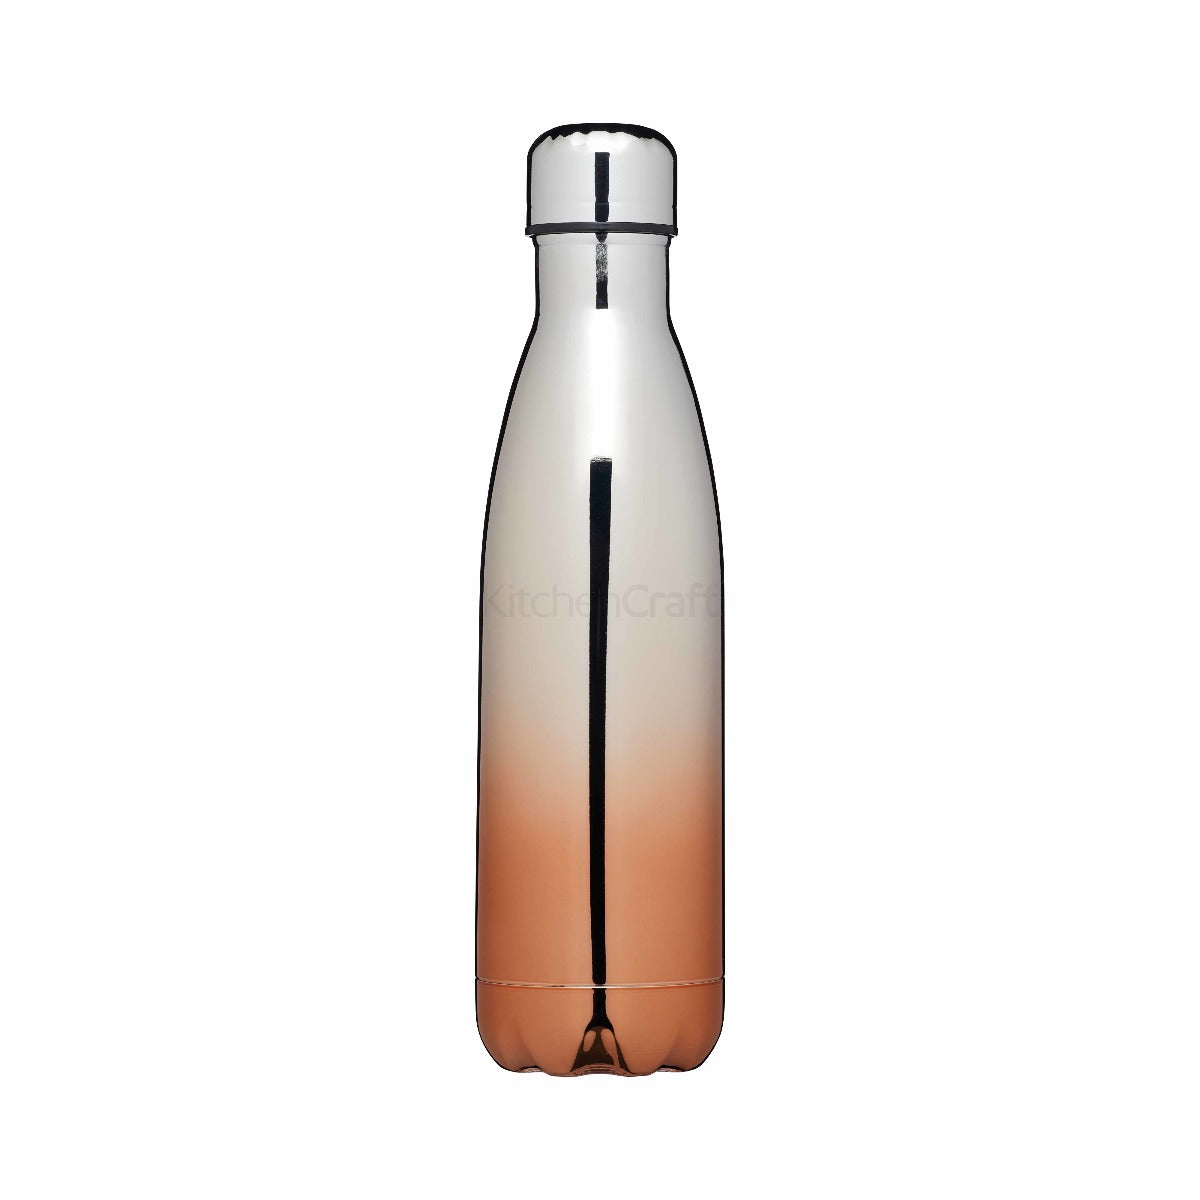 Le'Xpress Ombre Copper Finish Drinks Bottle 500ml